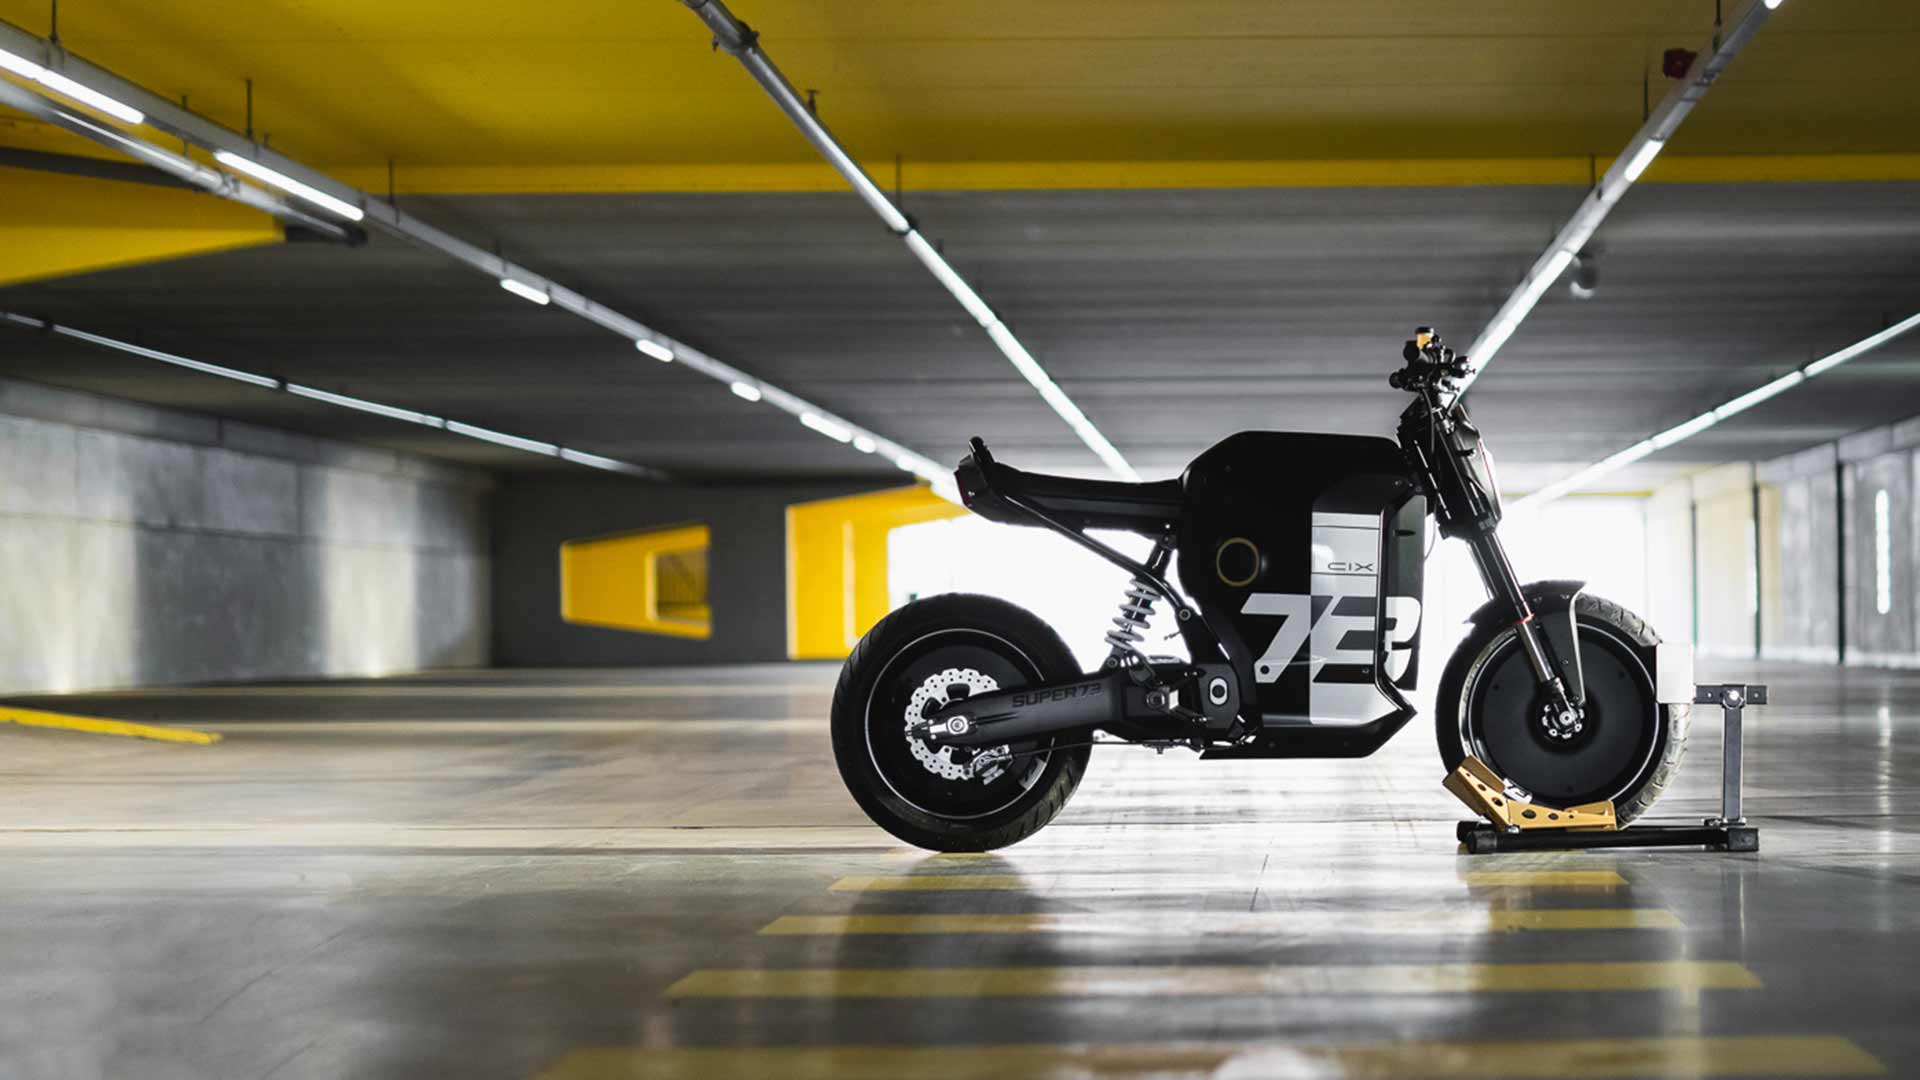 Super73-C1X motorbike in a garage.